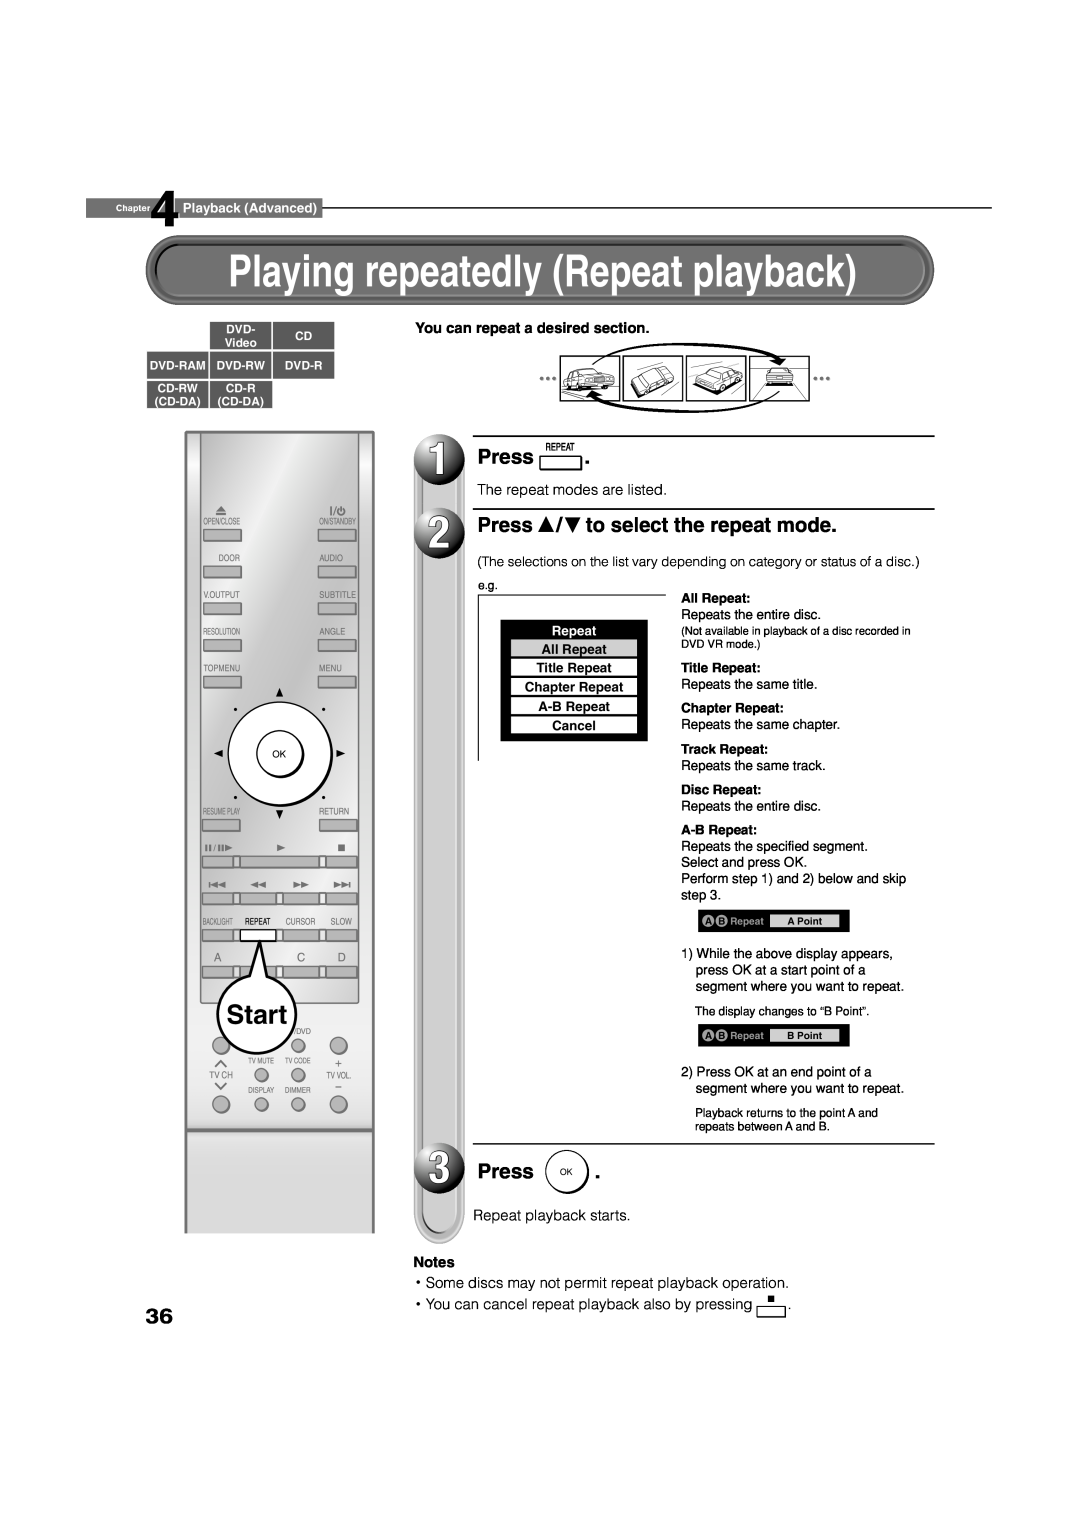 Toshiba HD-XA1, hd-xa1kn Press / to select the repeat mode, Playing repeatedly Repeat playback, Start, Playback Advanced 